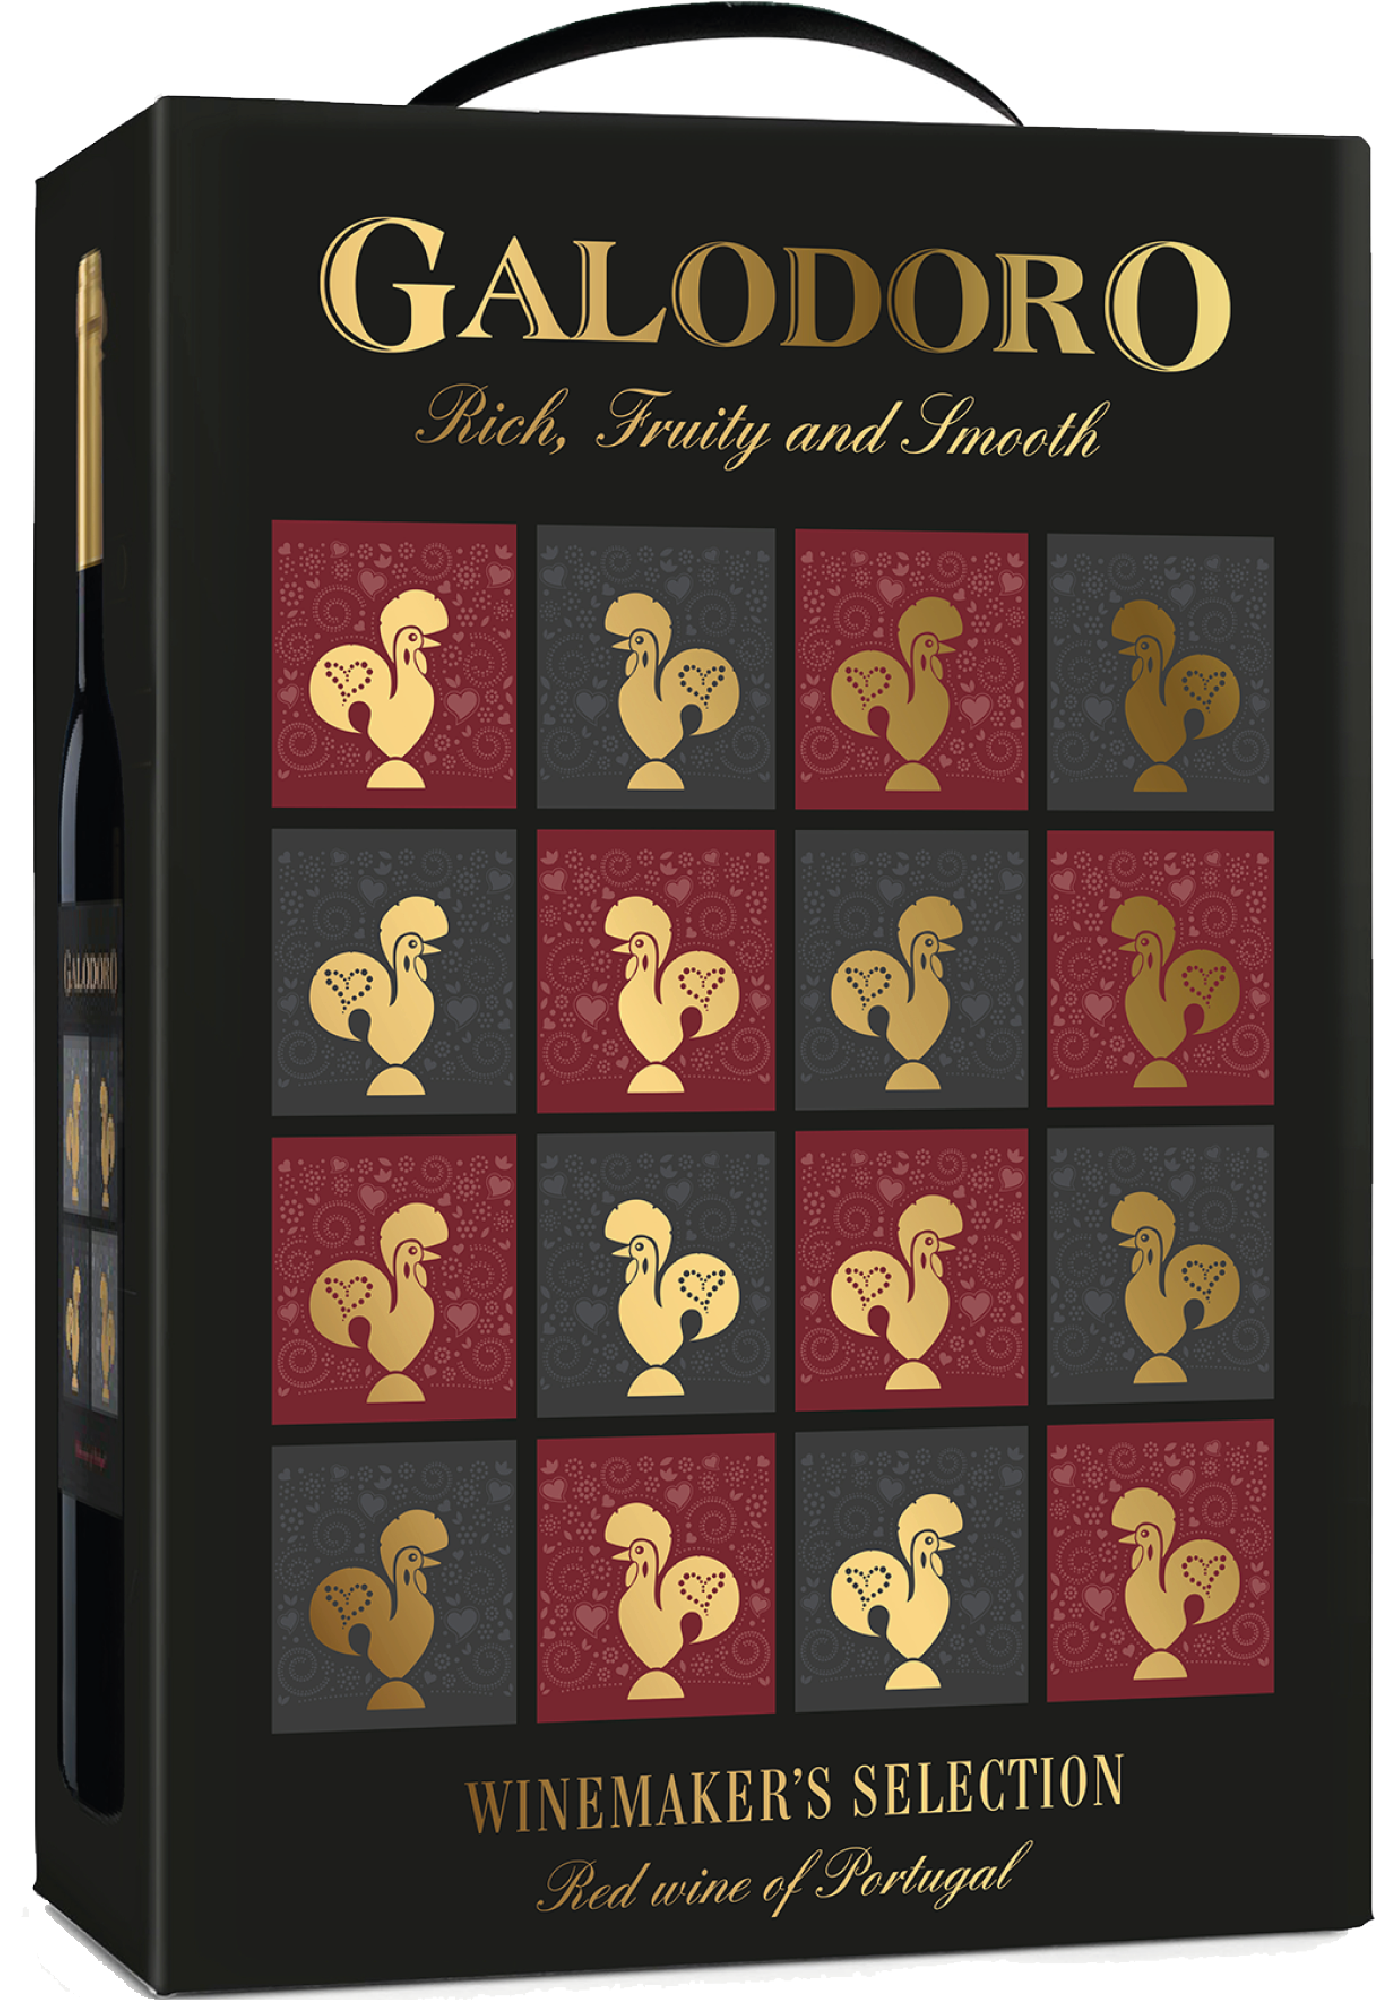 Galodoro Winemaker's Red